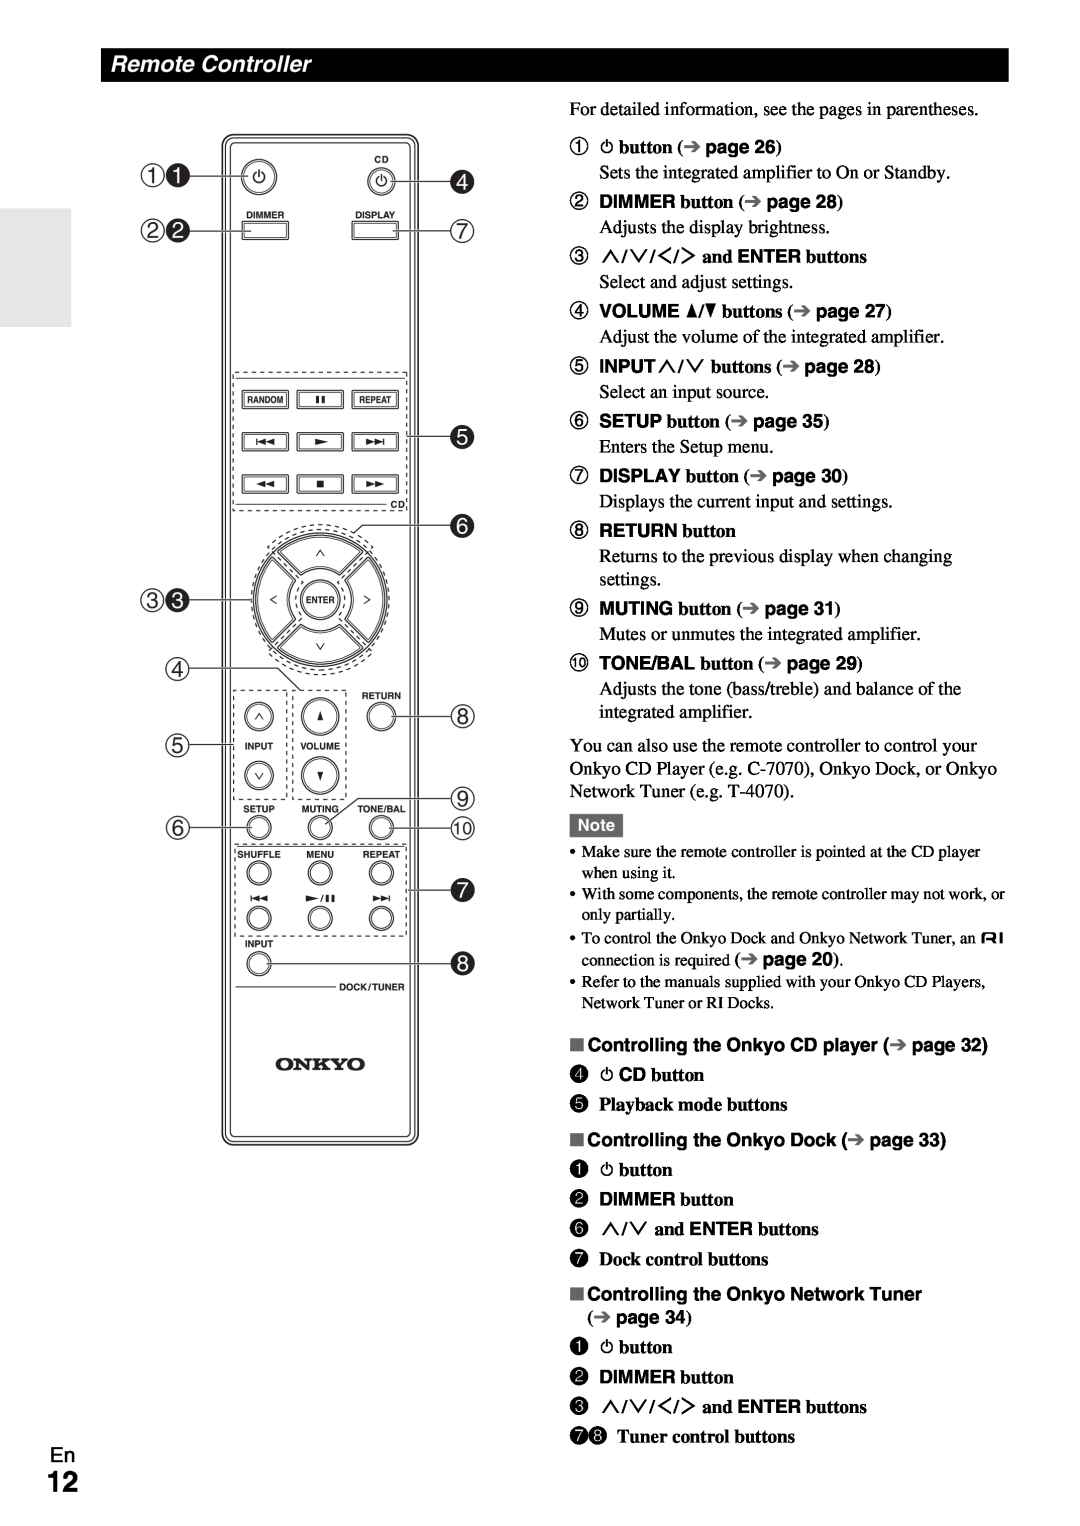 Onkyo A-9070 instruction manual cc d h e i fj g h, Remote Controller, a 8button page, d 8CD button e Playback mode buttons 